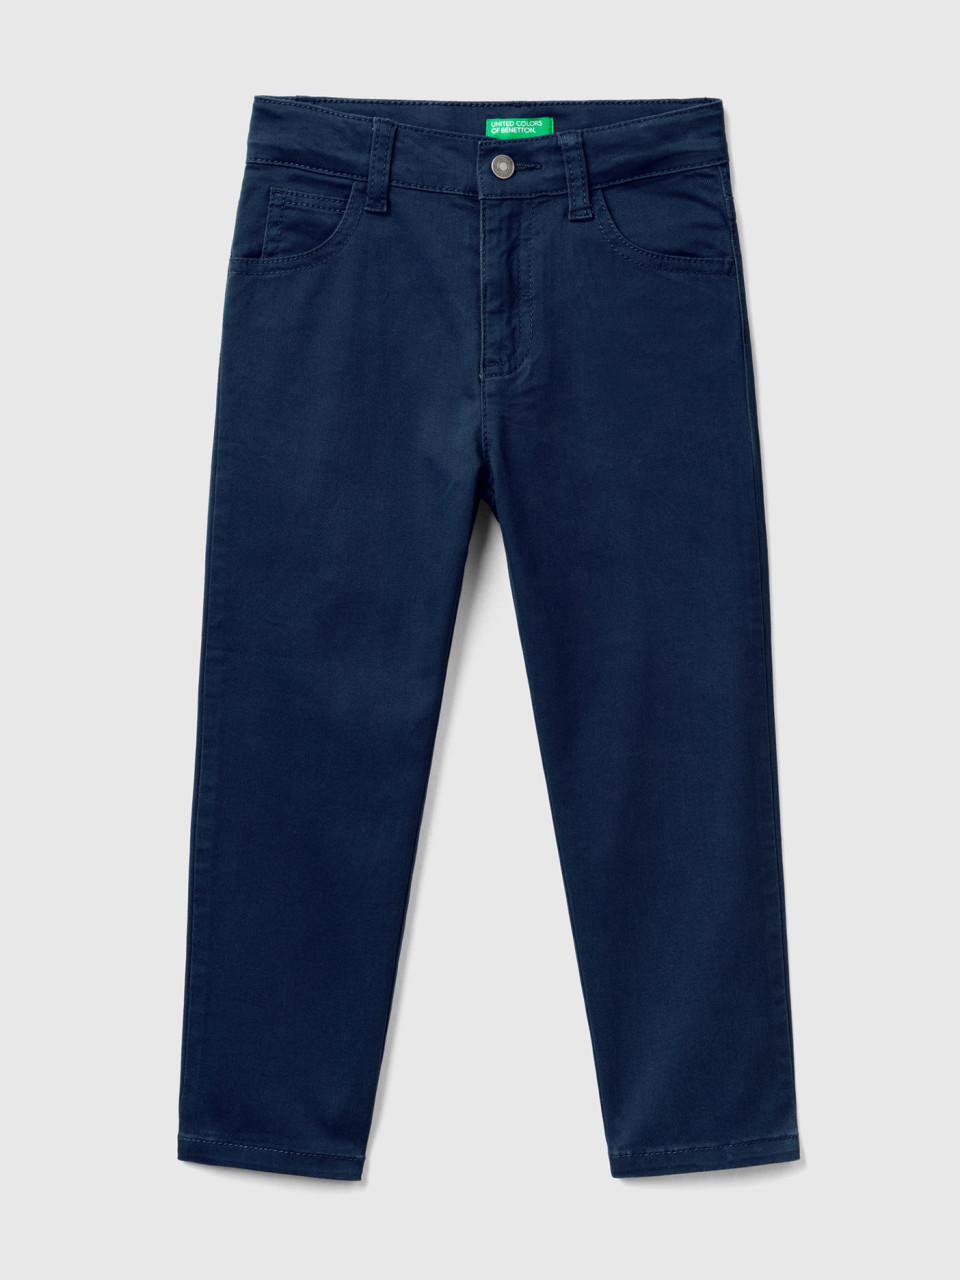 Benetton, Five-pocket Stretch Trousers, Dark Blue, Kids